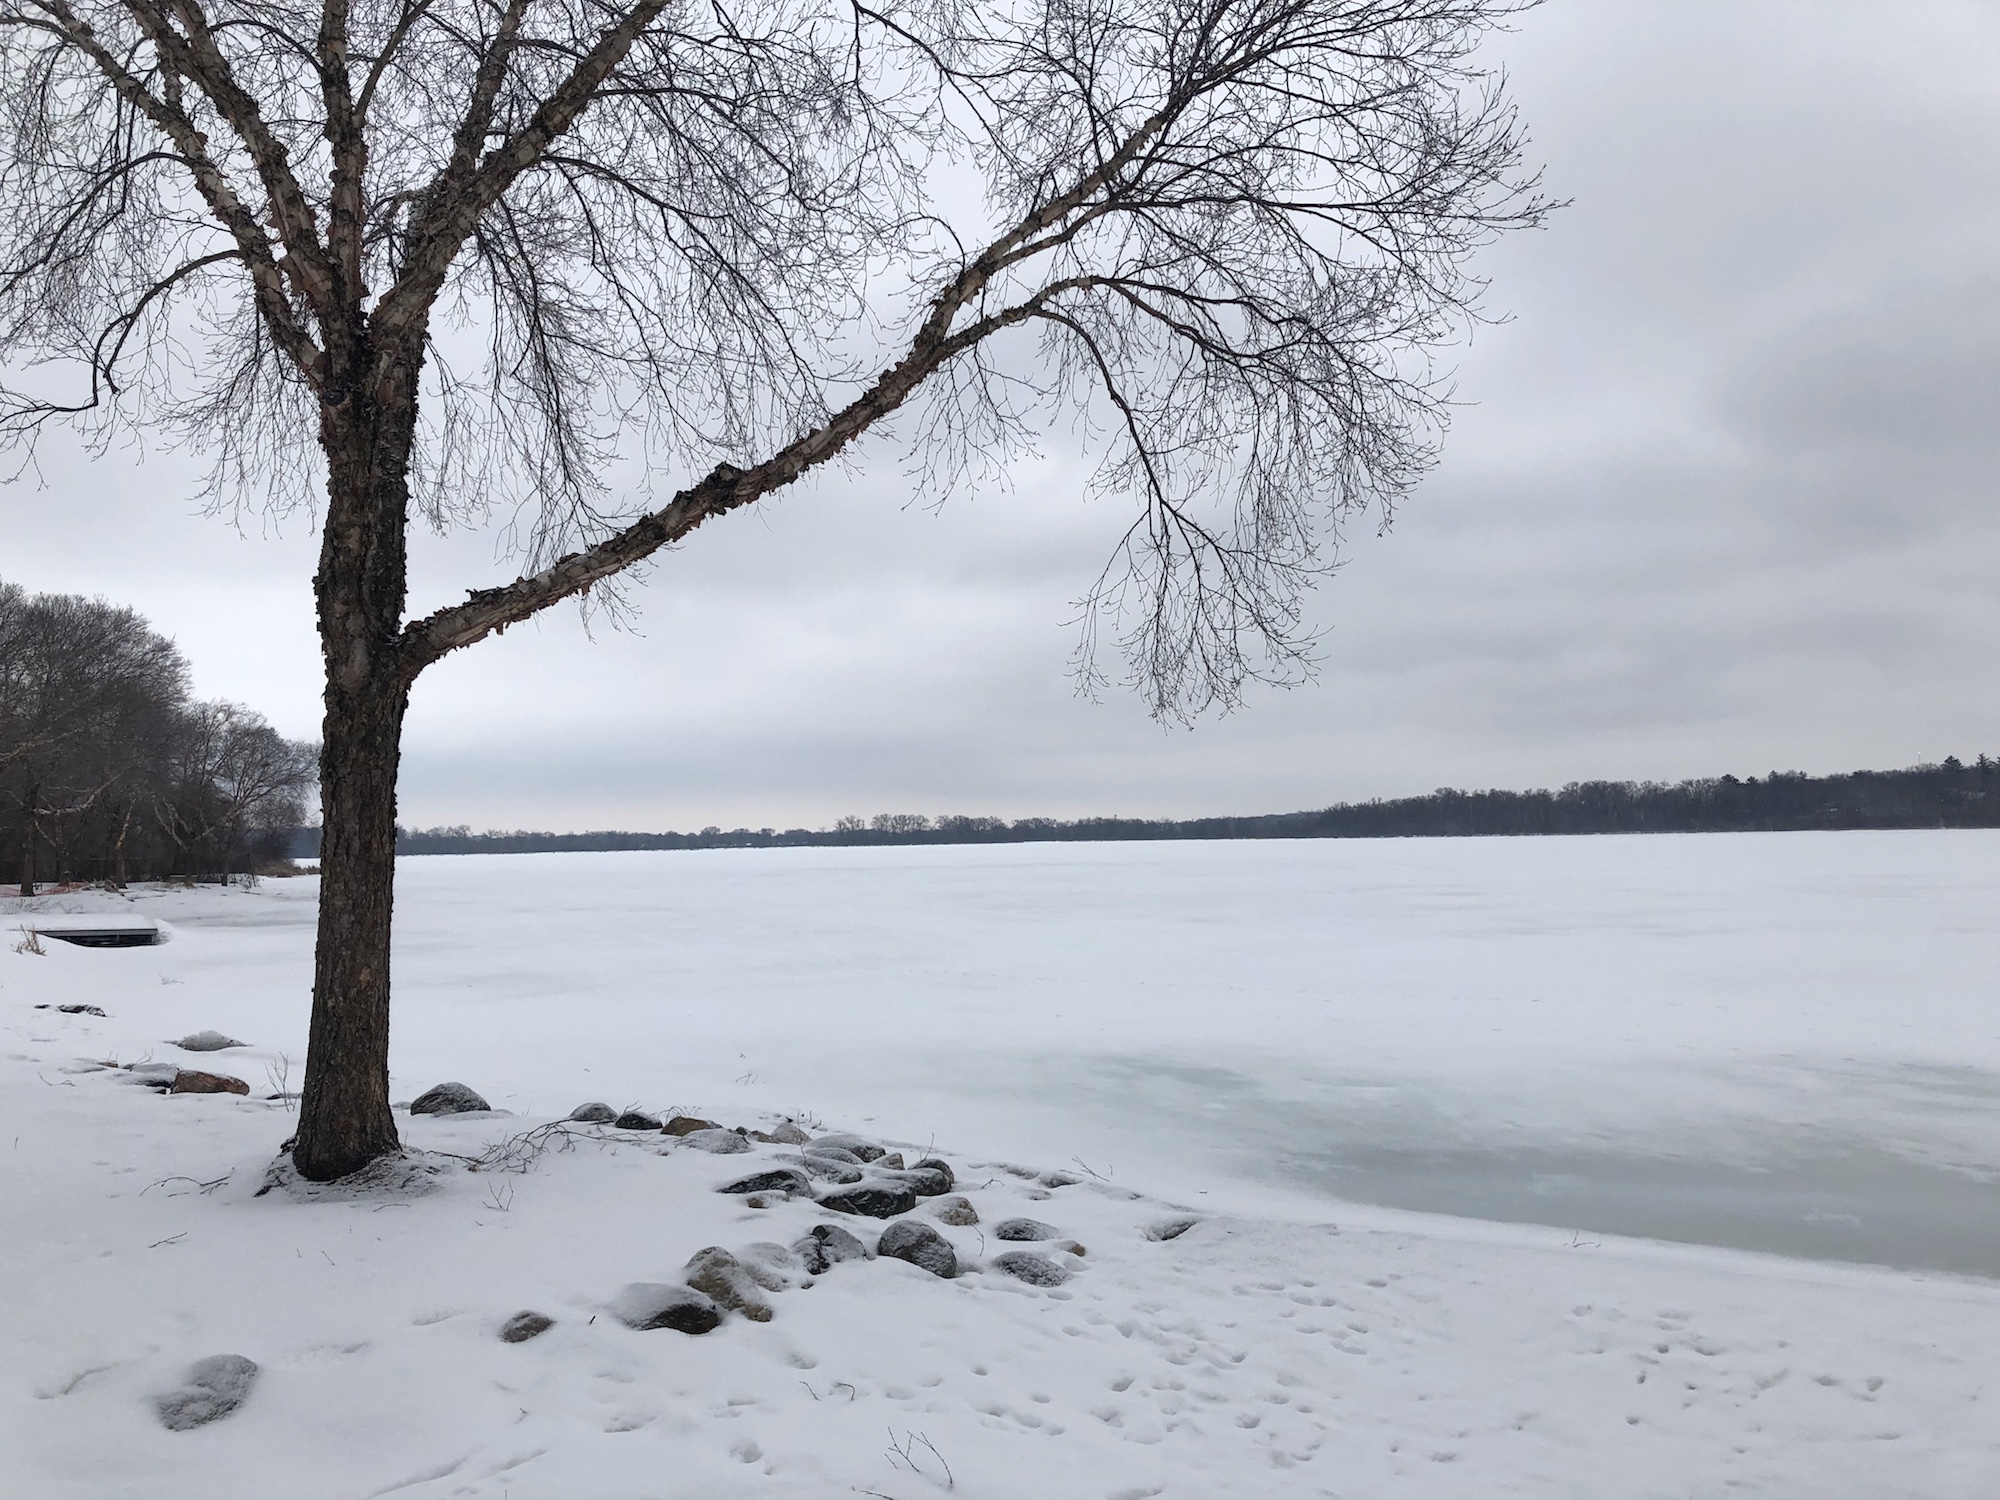 Lake Wingra on March 10, 2019.